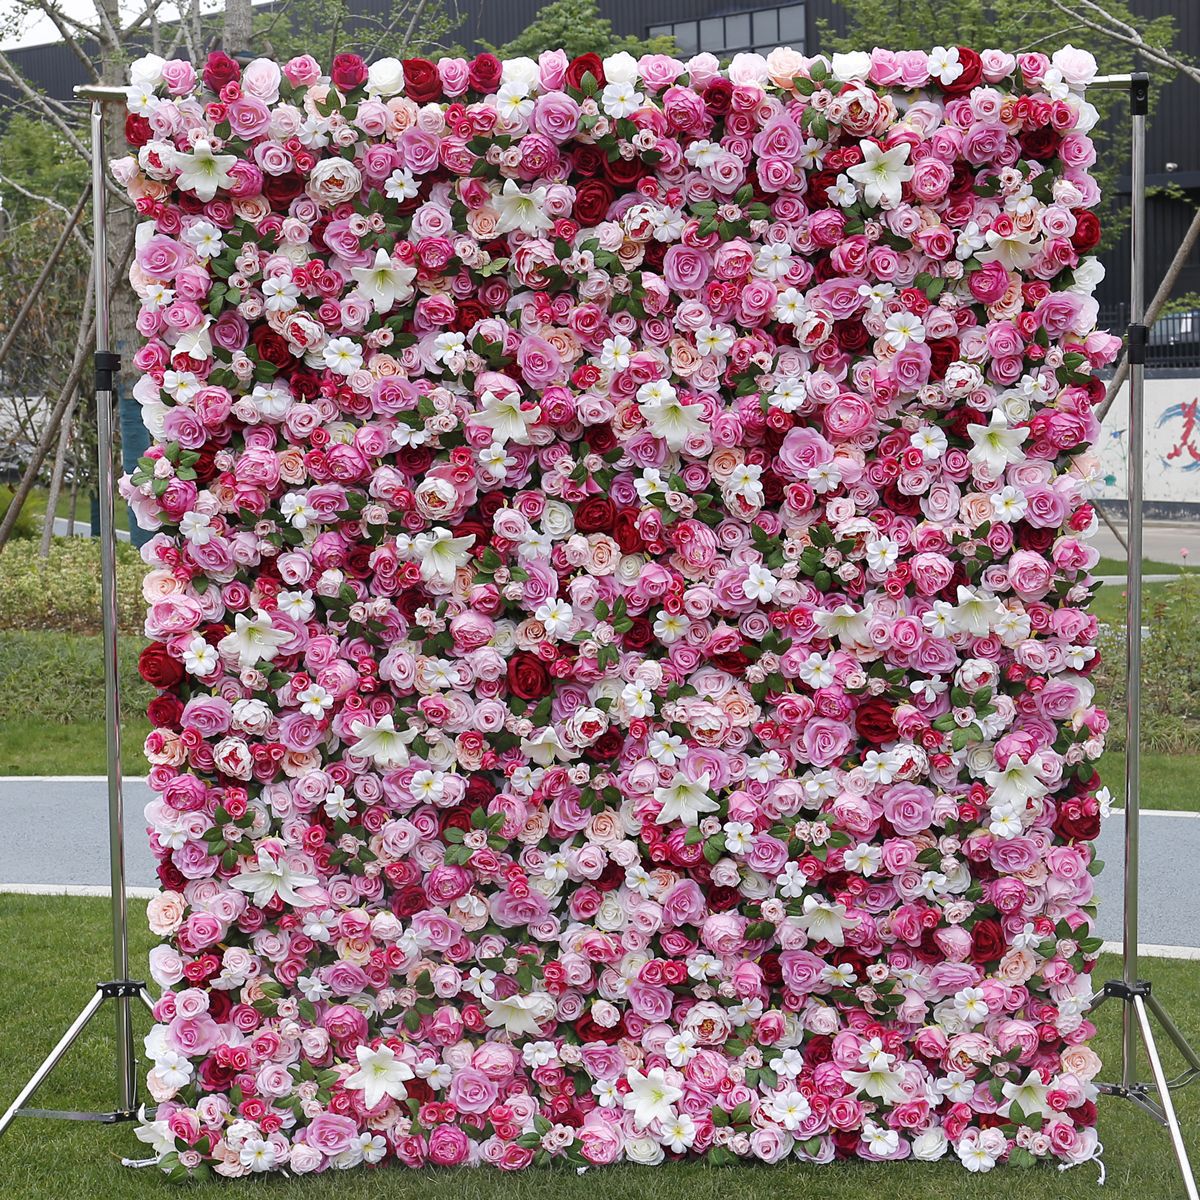 Simulation flower background wall wedding decoration outdoor wedding birthday party layout